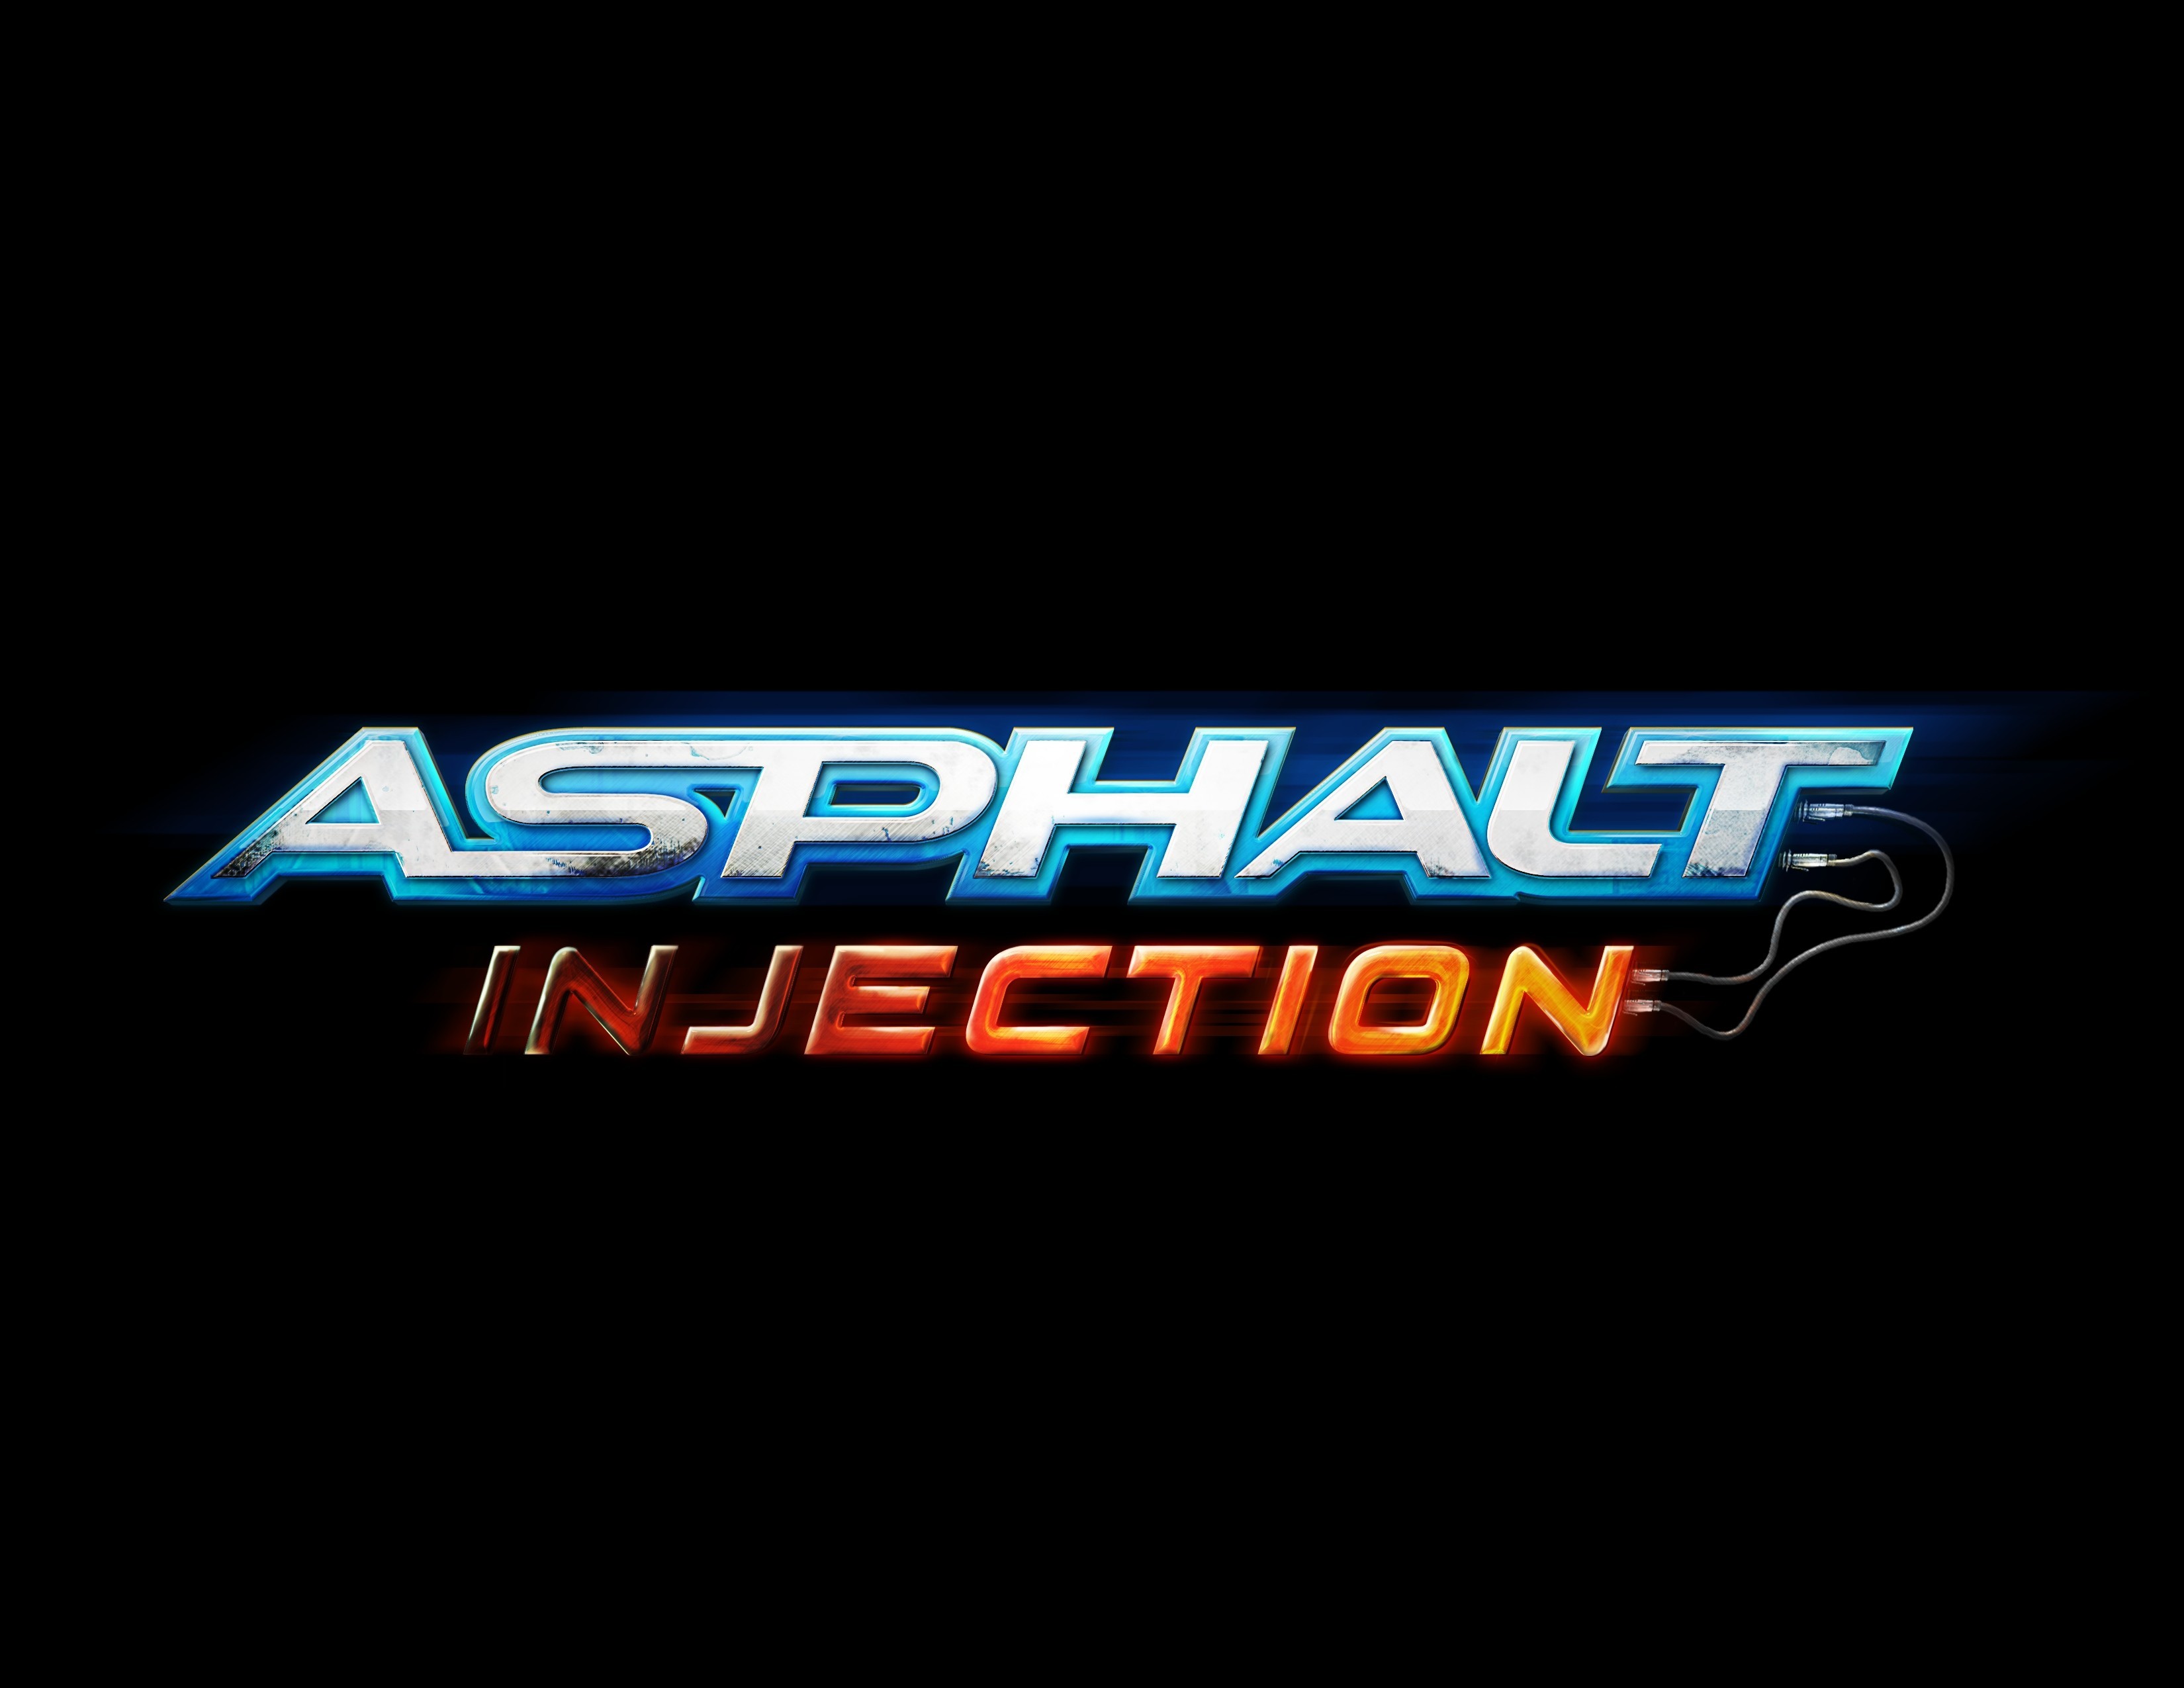 Asphalt: Injection (PS Vita) Review